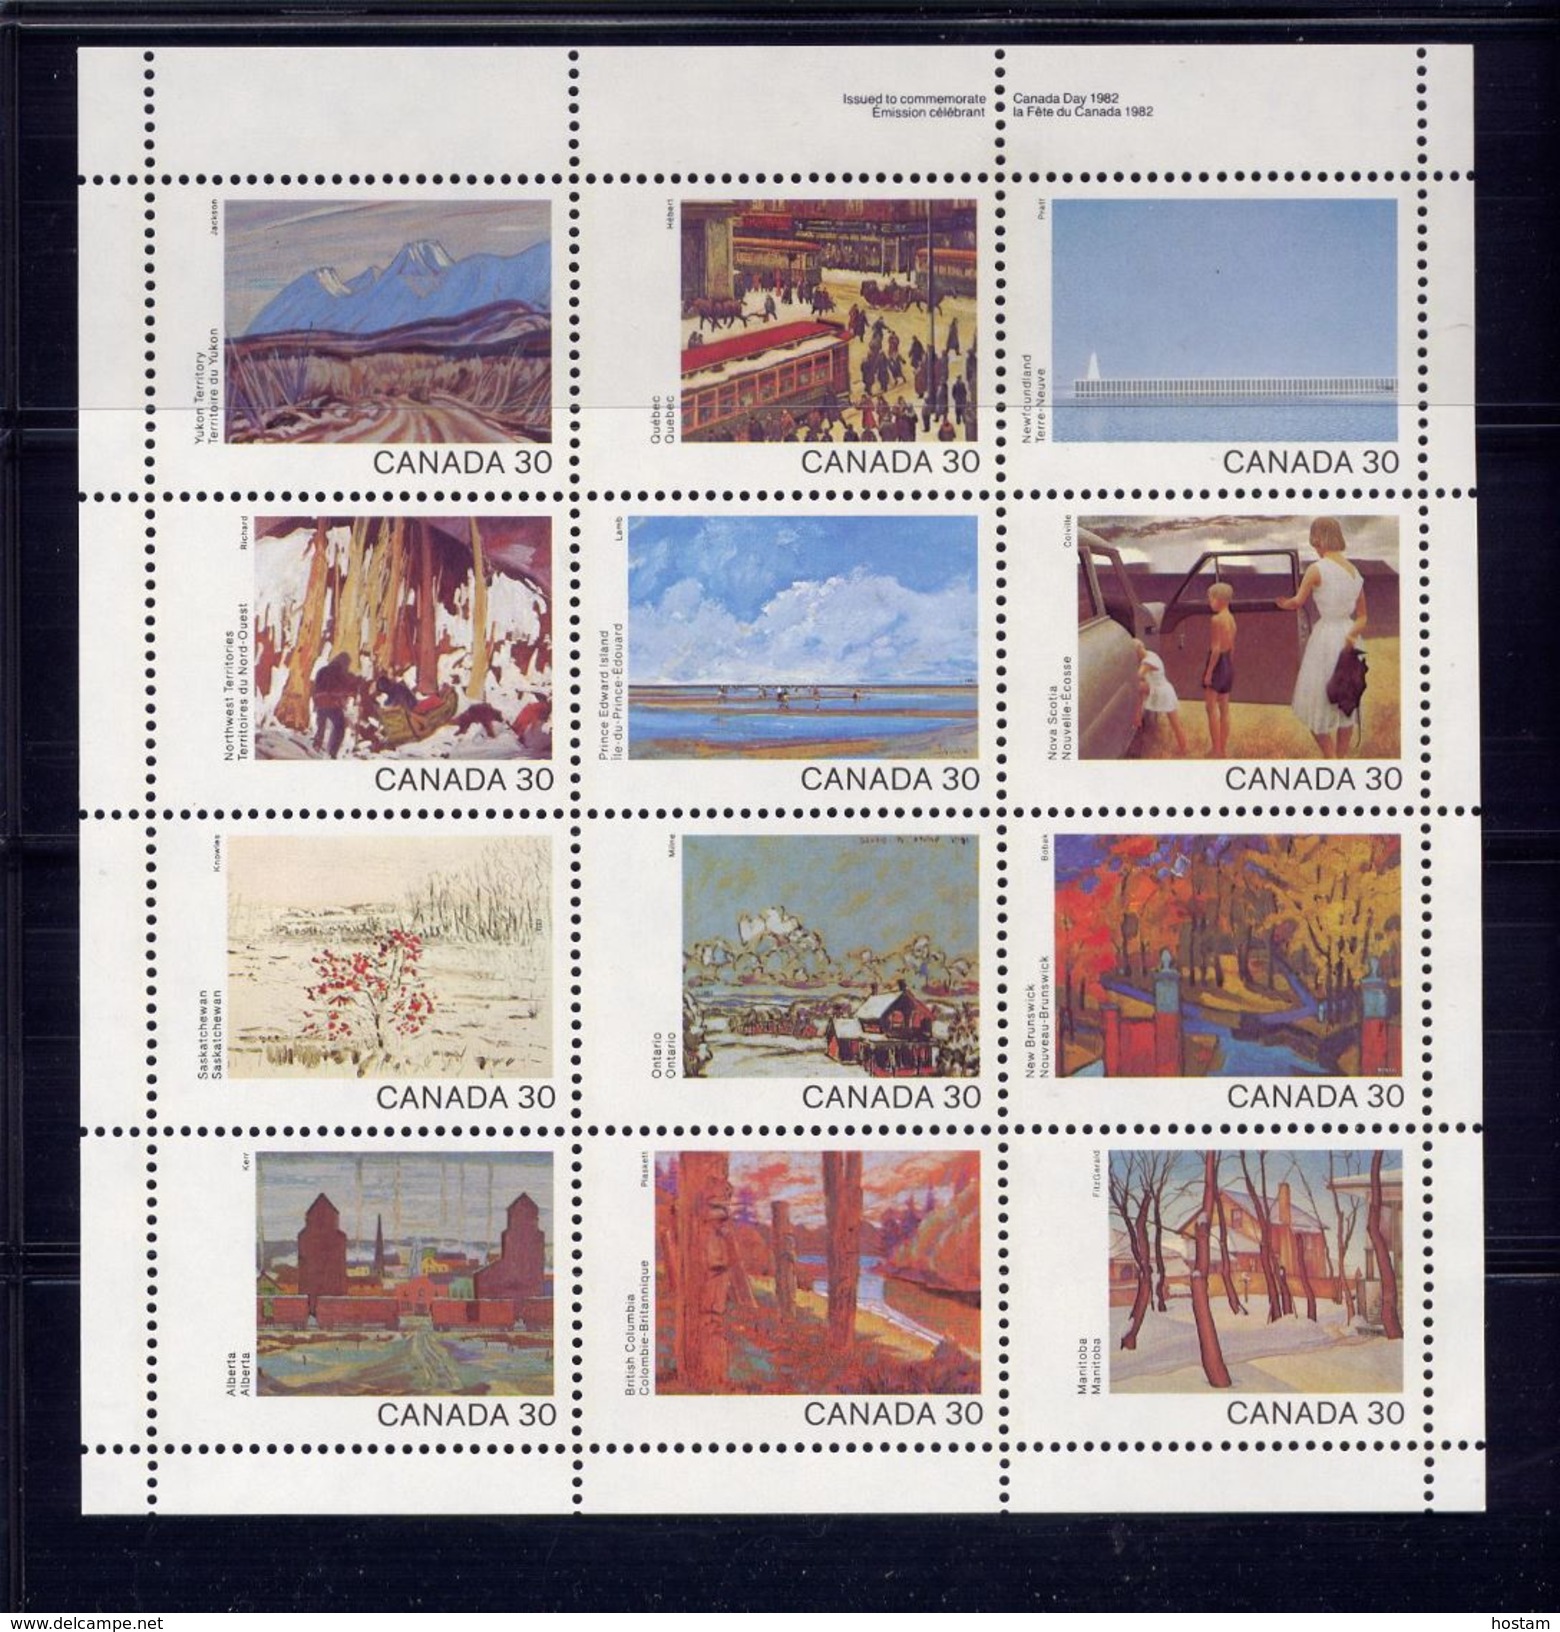 CANADA, 1982, # 966a, UR Narrow.  CANADA DAY,  MNH  12 Stamps - Blocs-feuillets